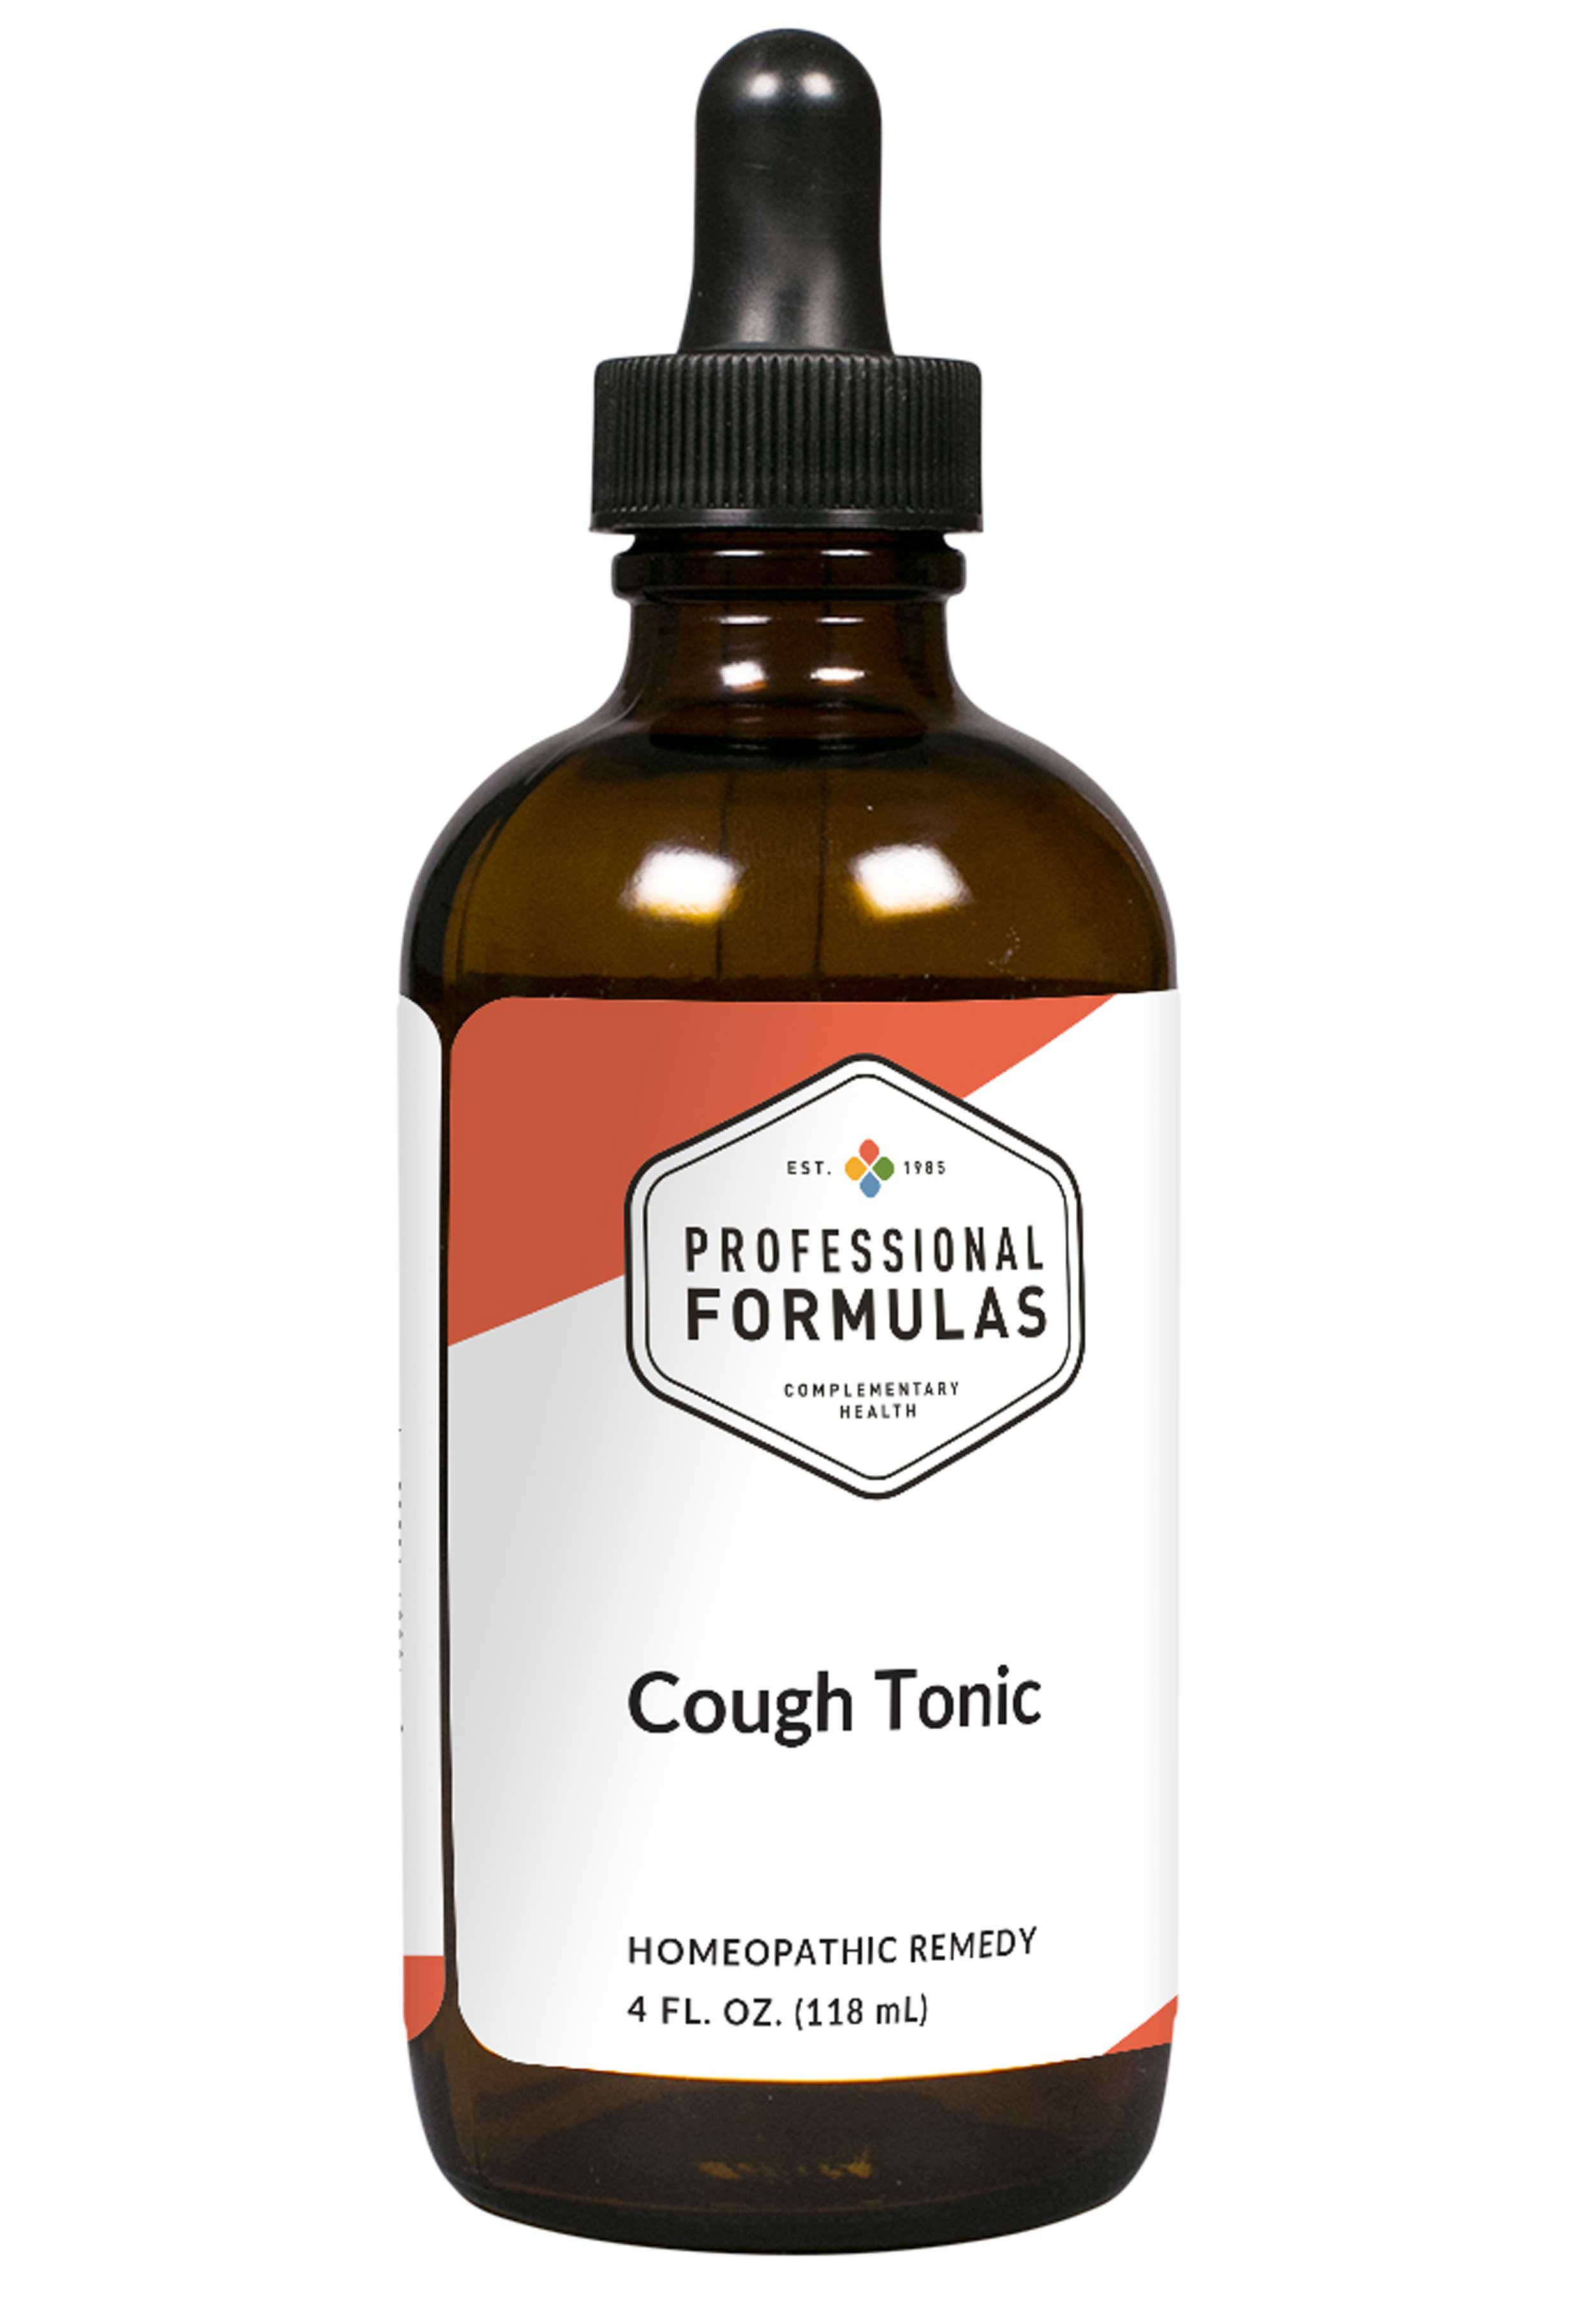 Professional Formulas Cough Tonic